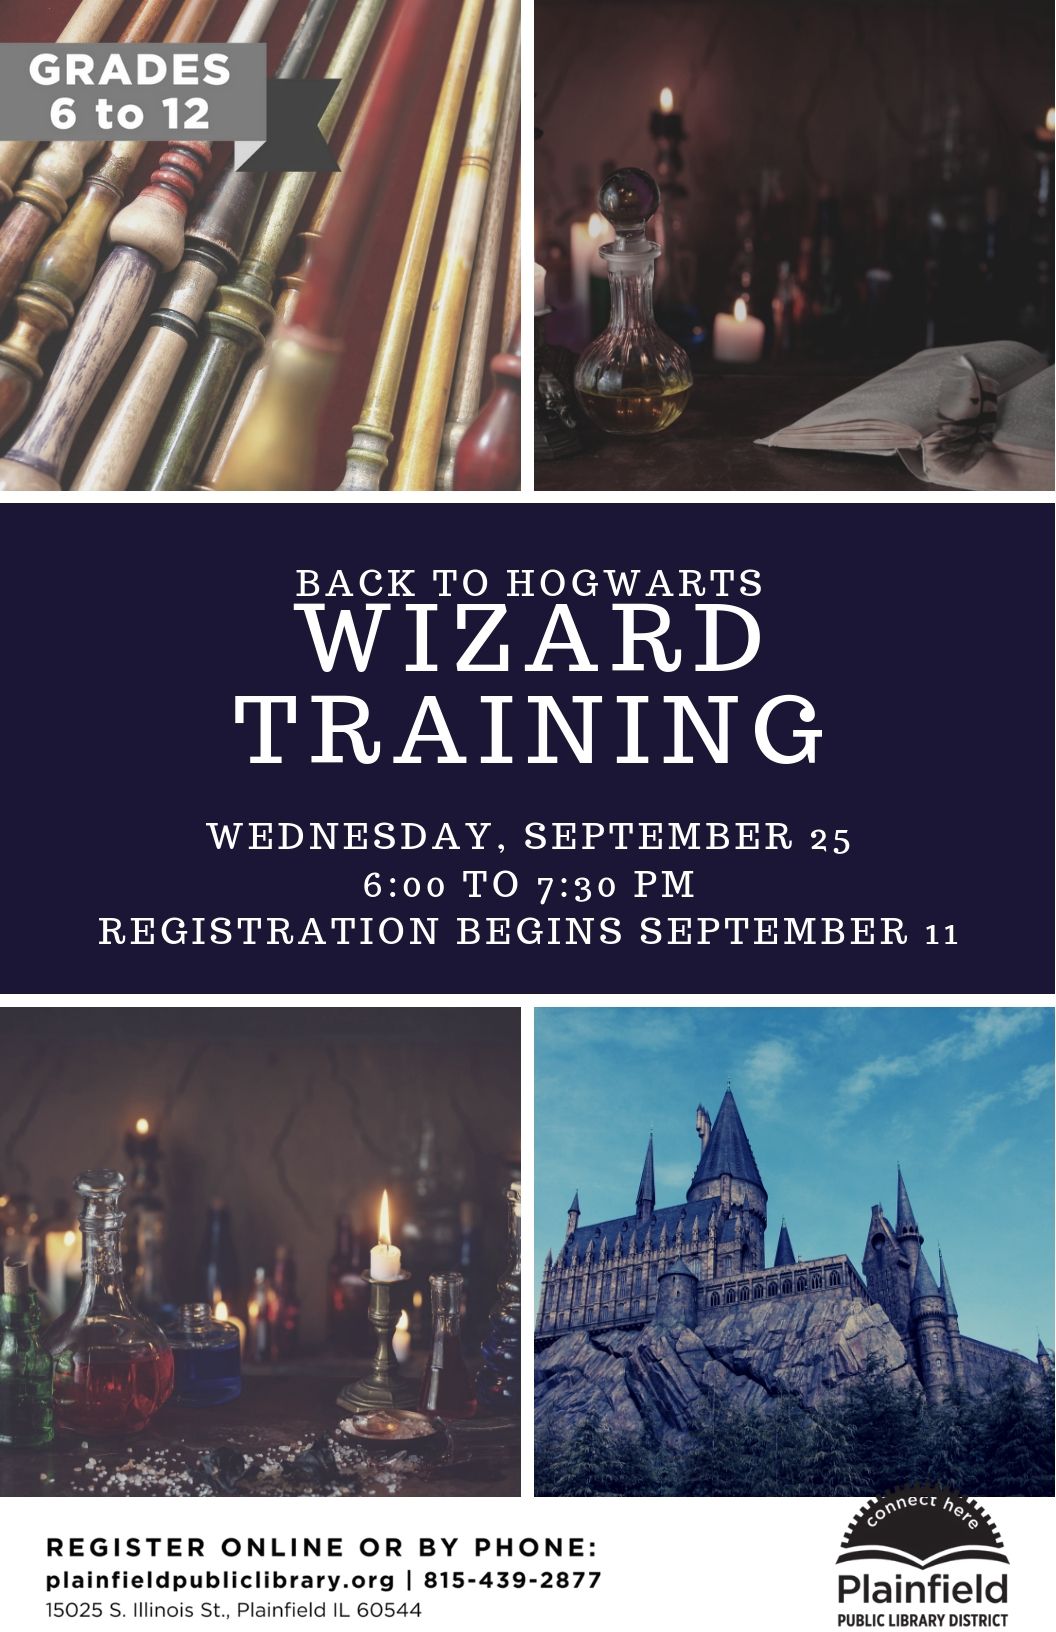 Wizard Training